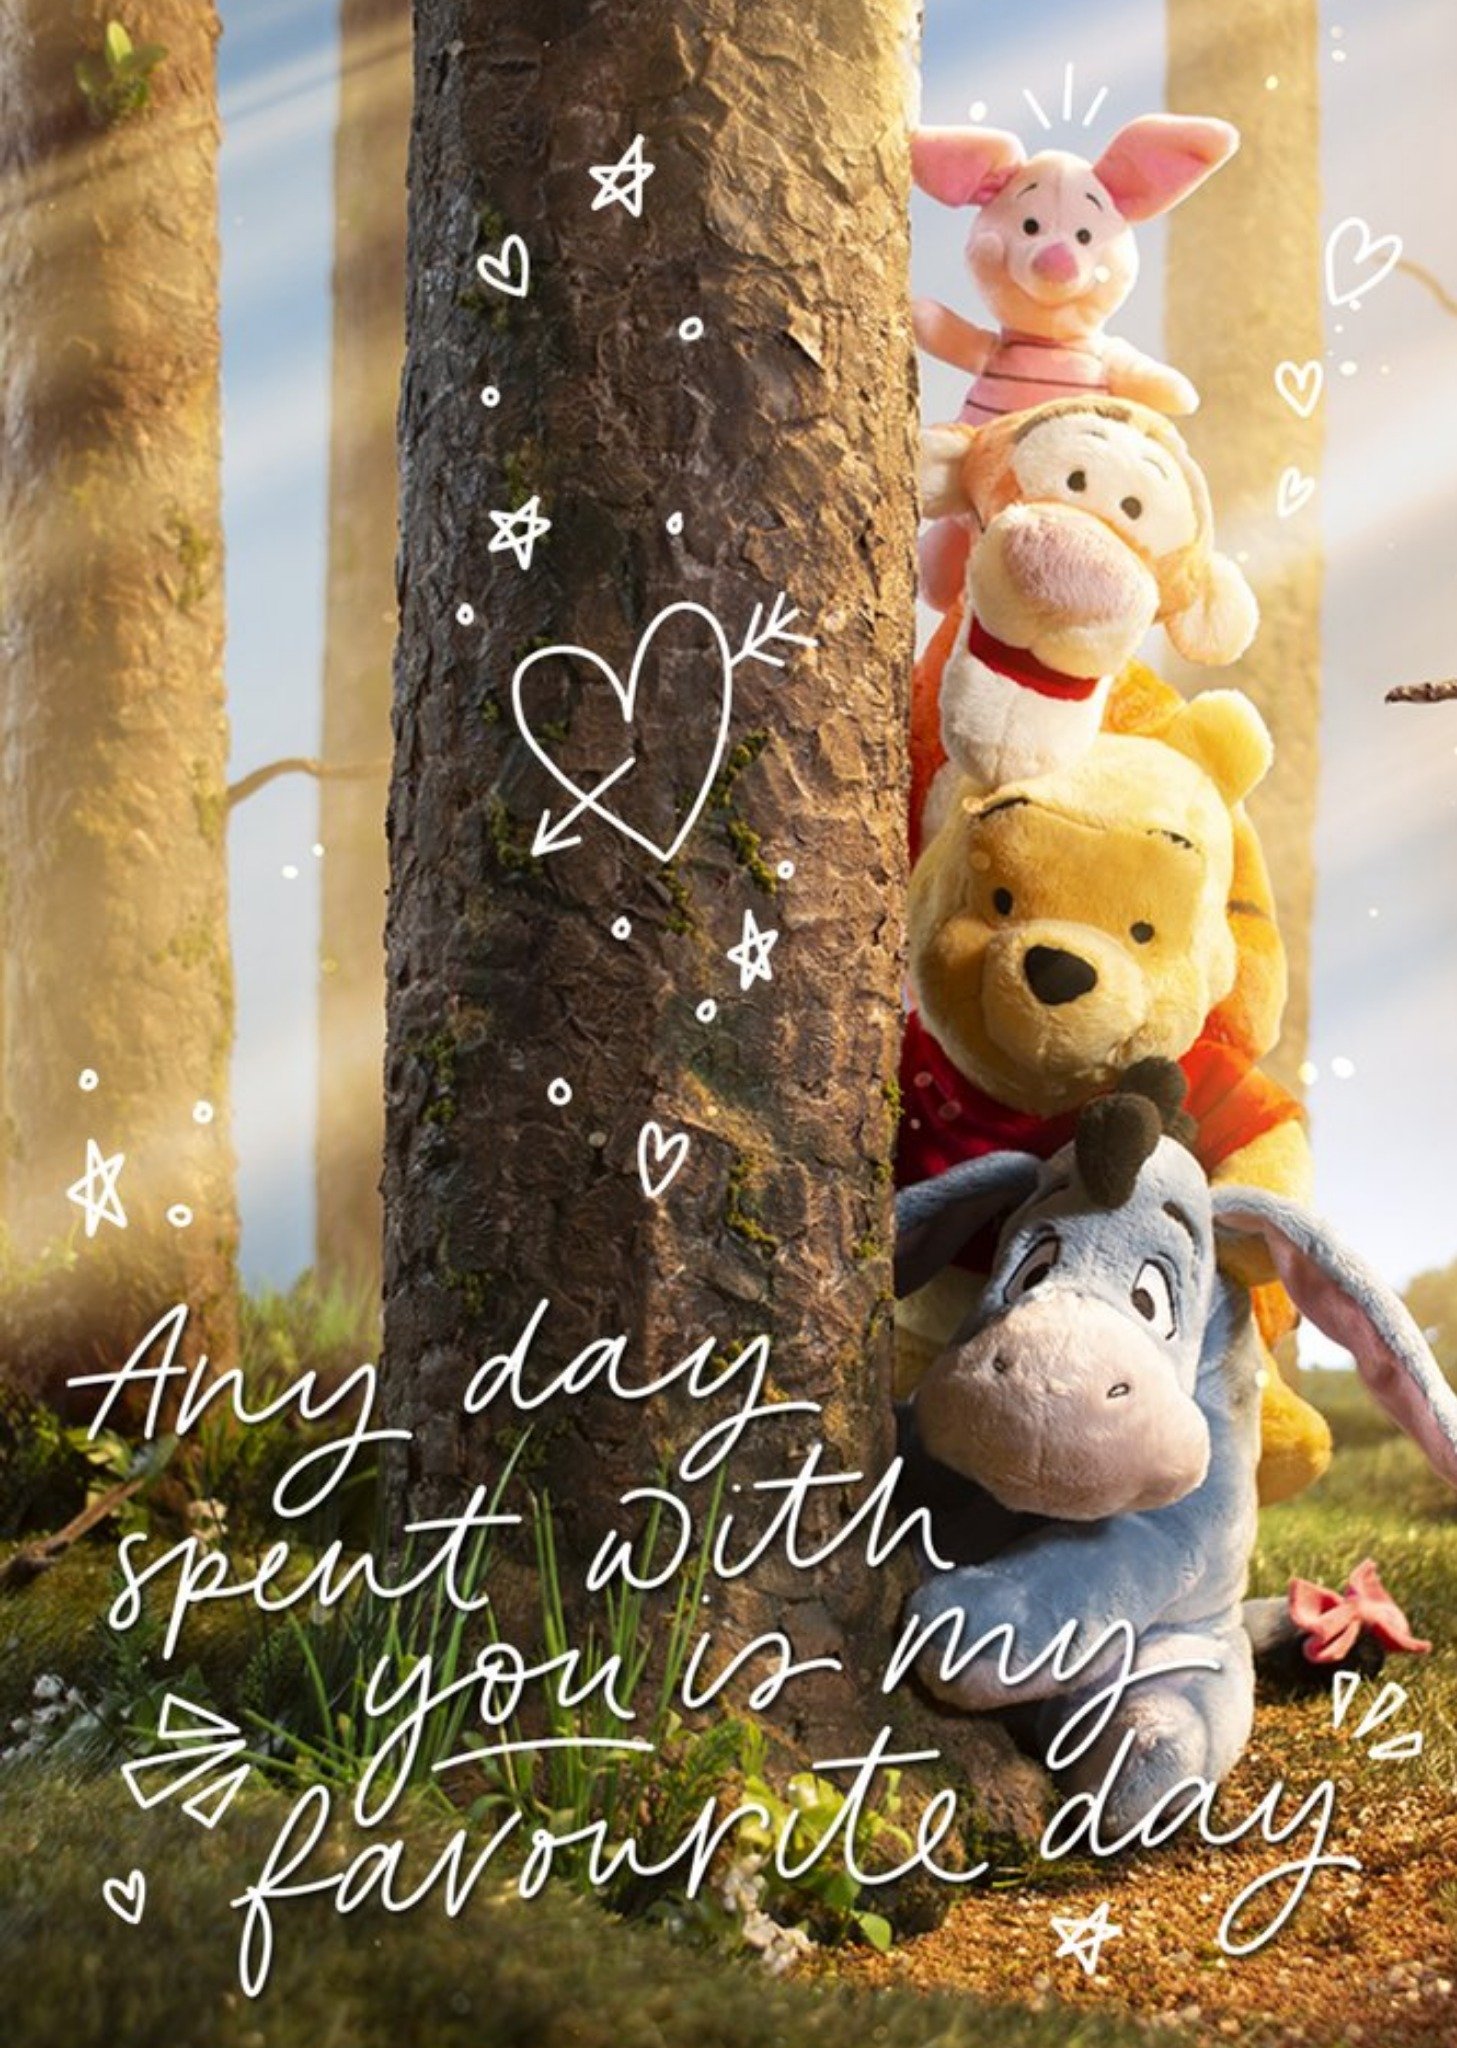 Cute Disney Plush Winne The Pooh And Friends Just A Not Card Ecard